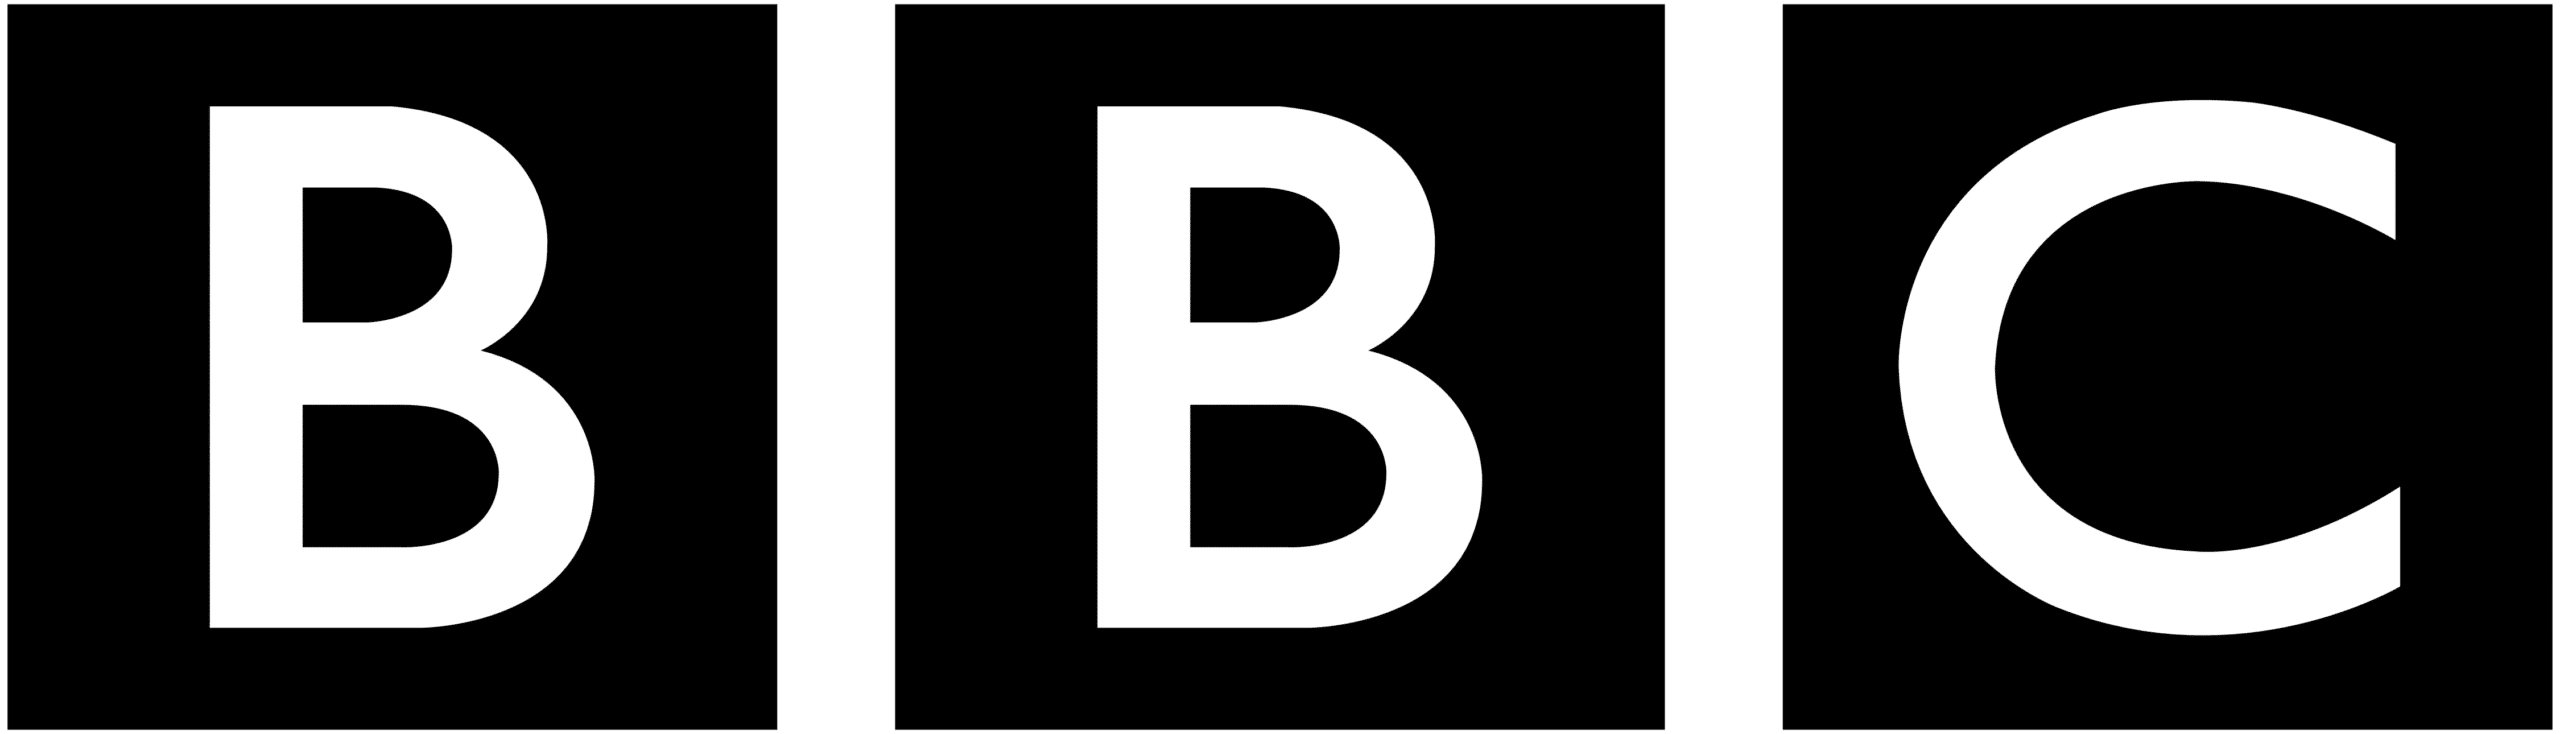 BBC_logo